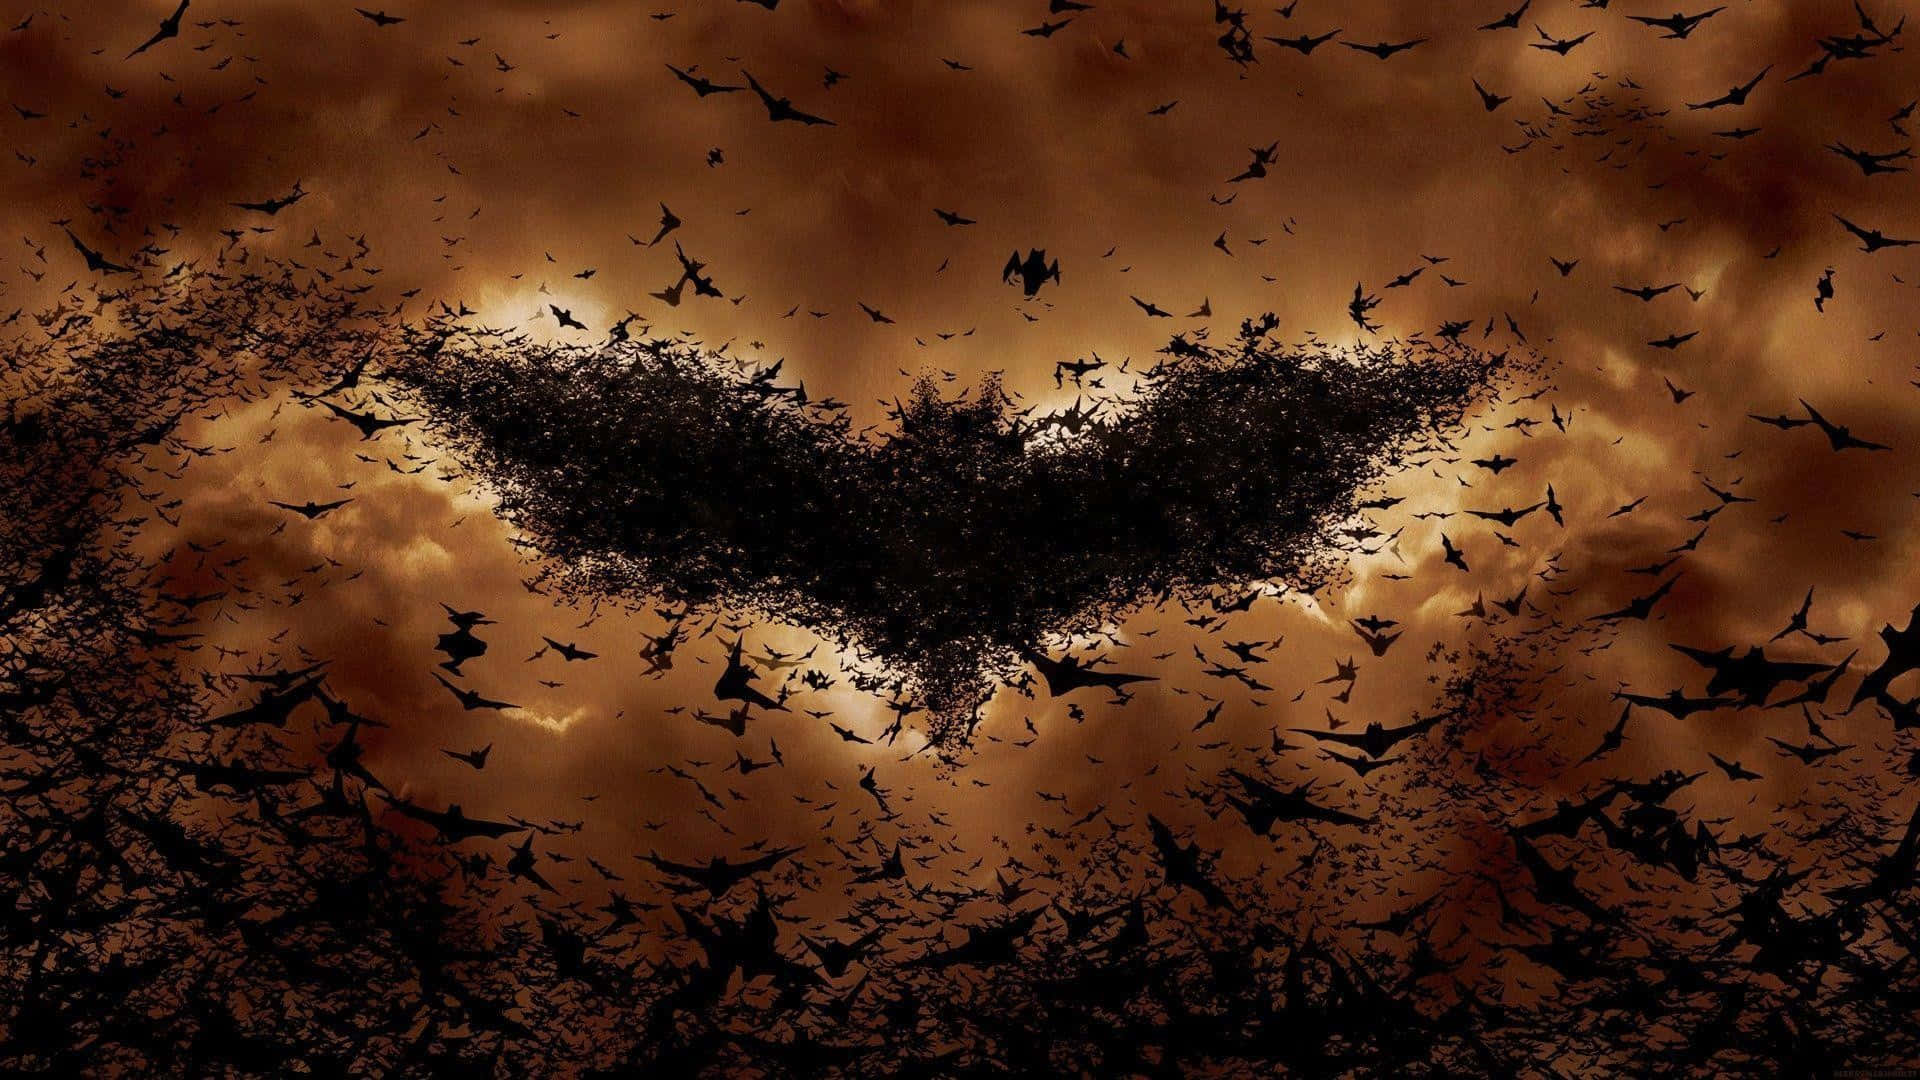 “mystical Bat Glides Through The Sky” Background